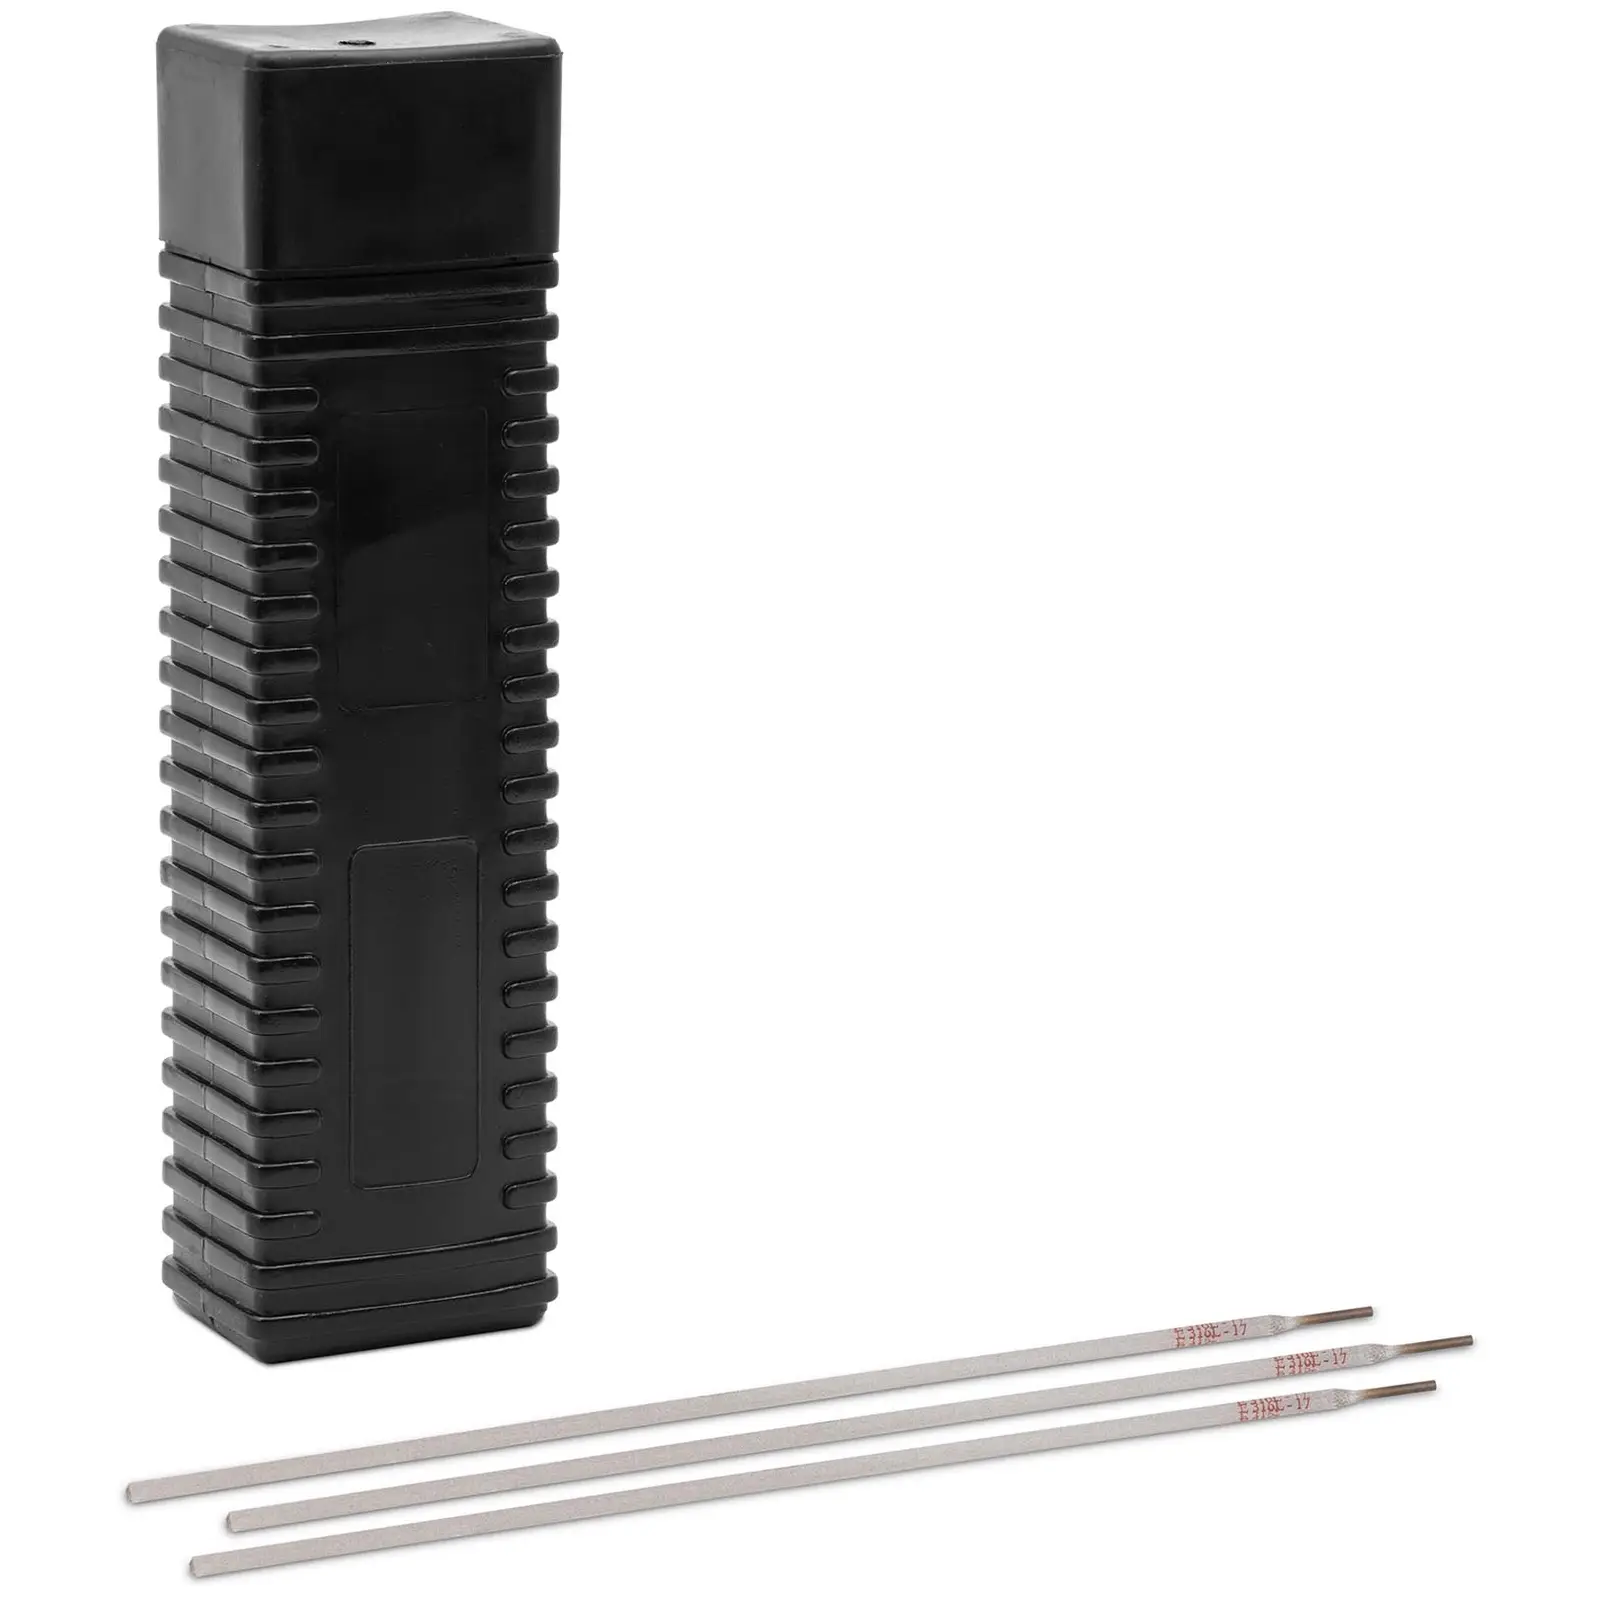 Šipke za zavarivanje nehrđajućih čelika - rutilno-kisele - 3.25 x 350 mm - 5 kg